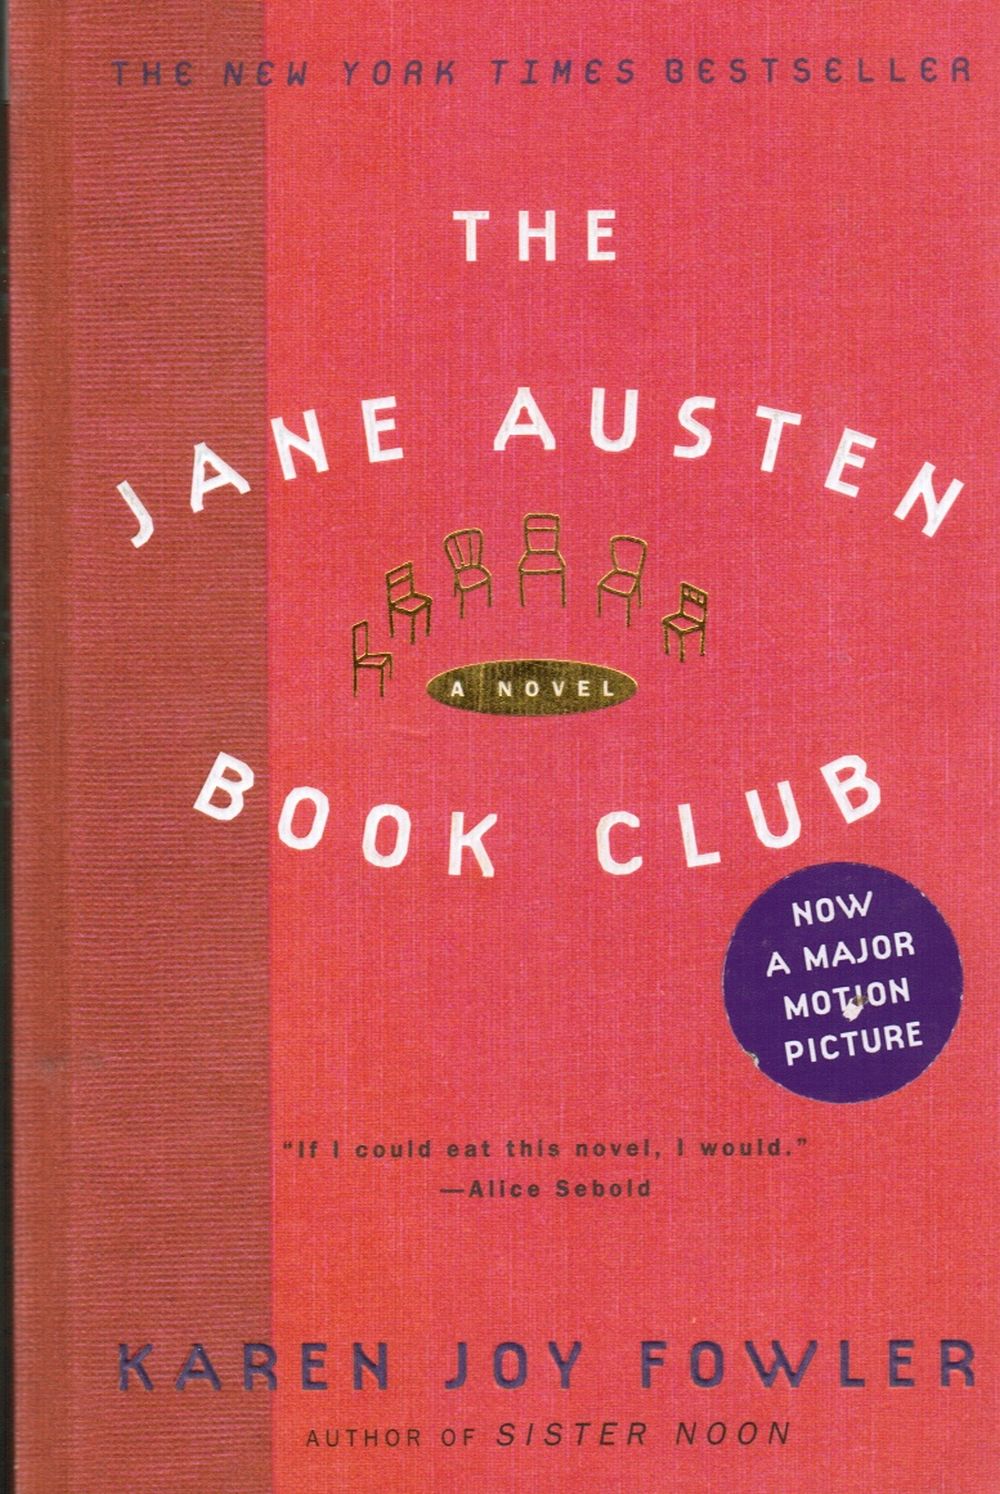 FOWLER, KAREN JOY - The Jane Austen Book Club - a Novel